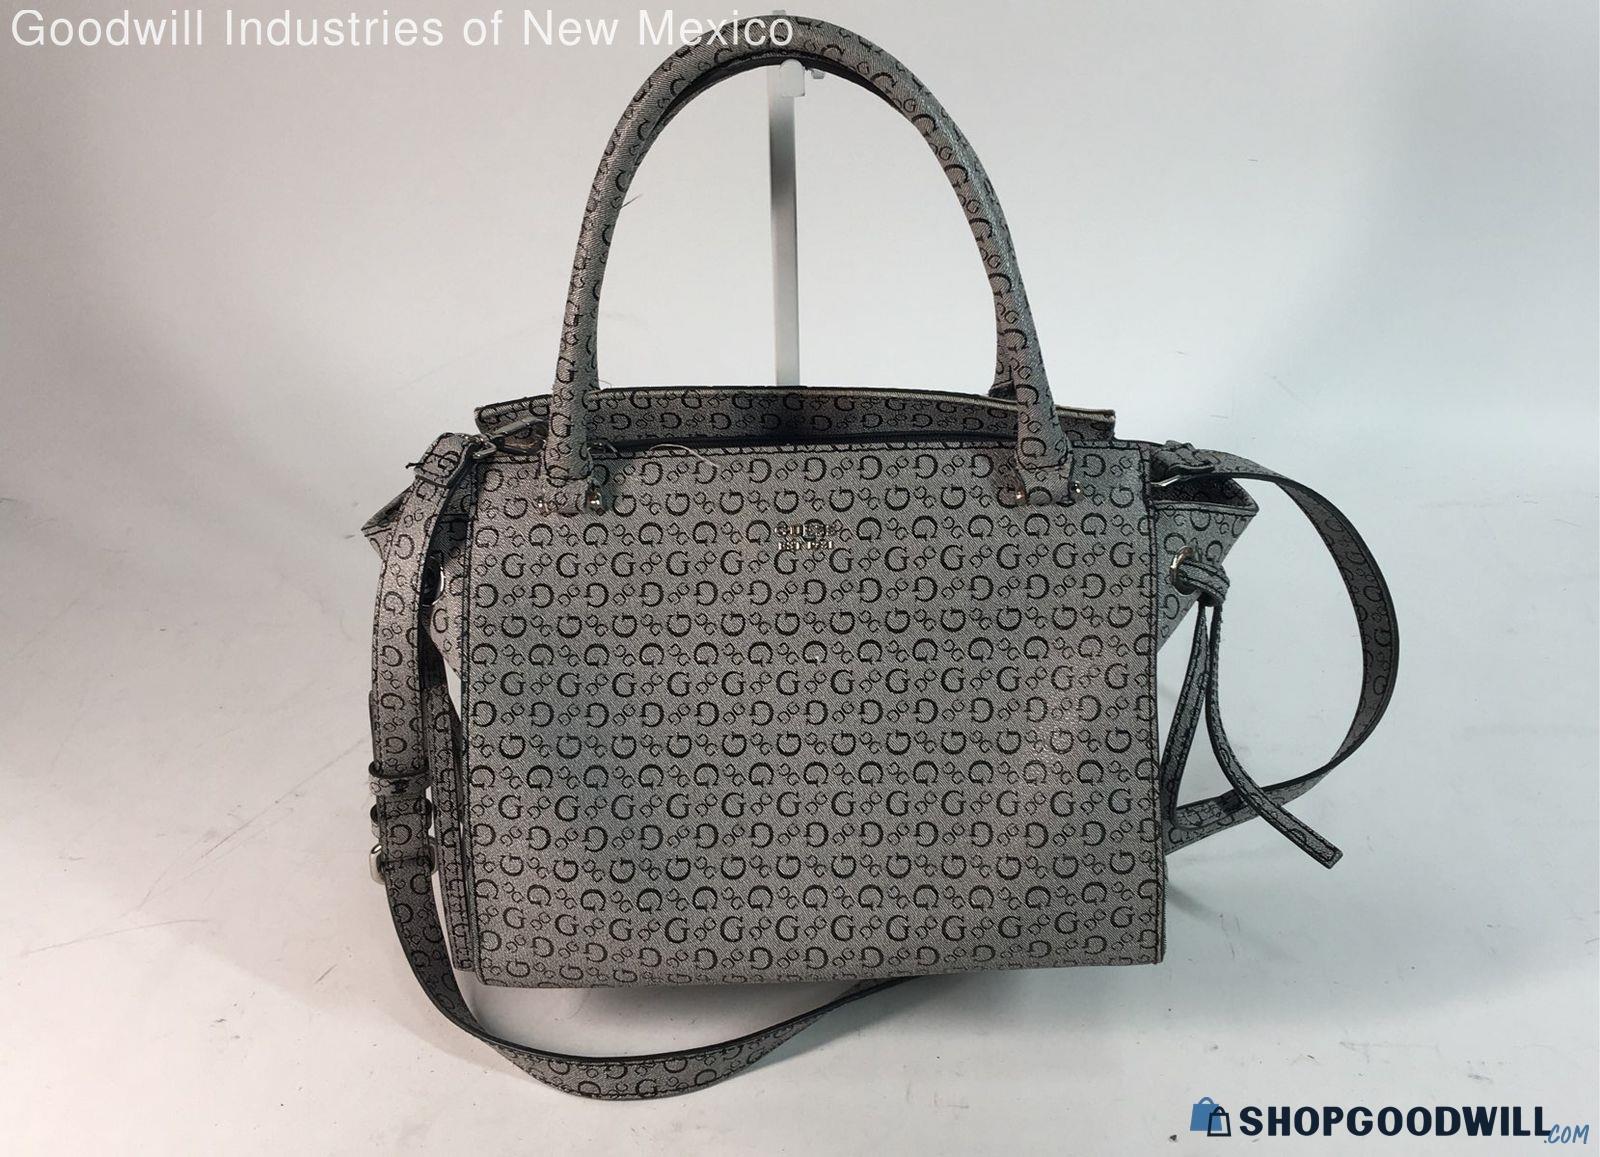 Used Guess Handbag | ShopGoodwill.com